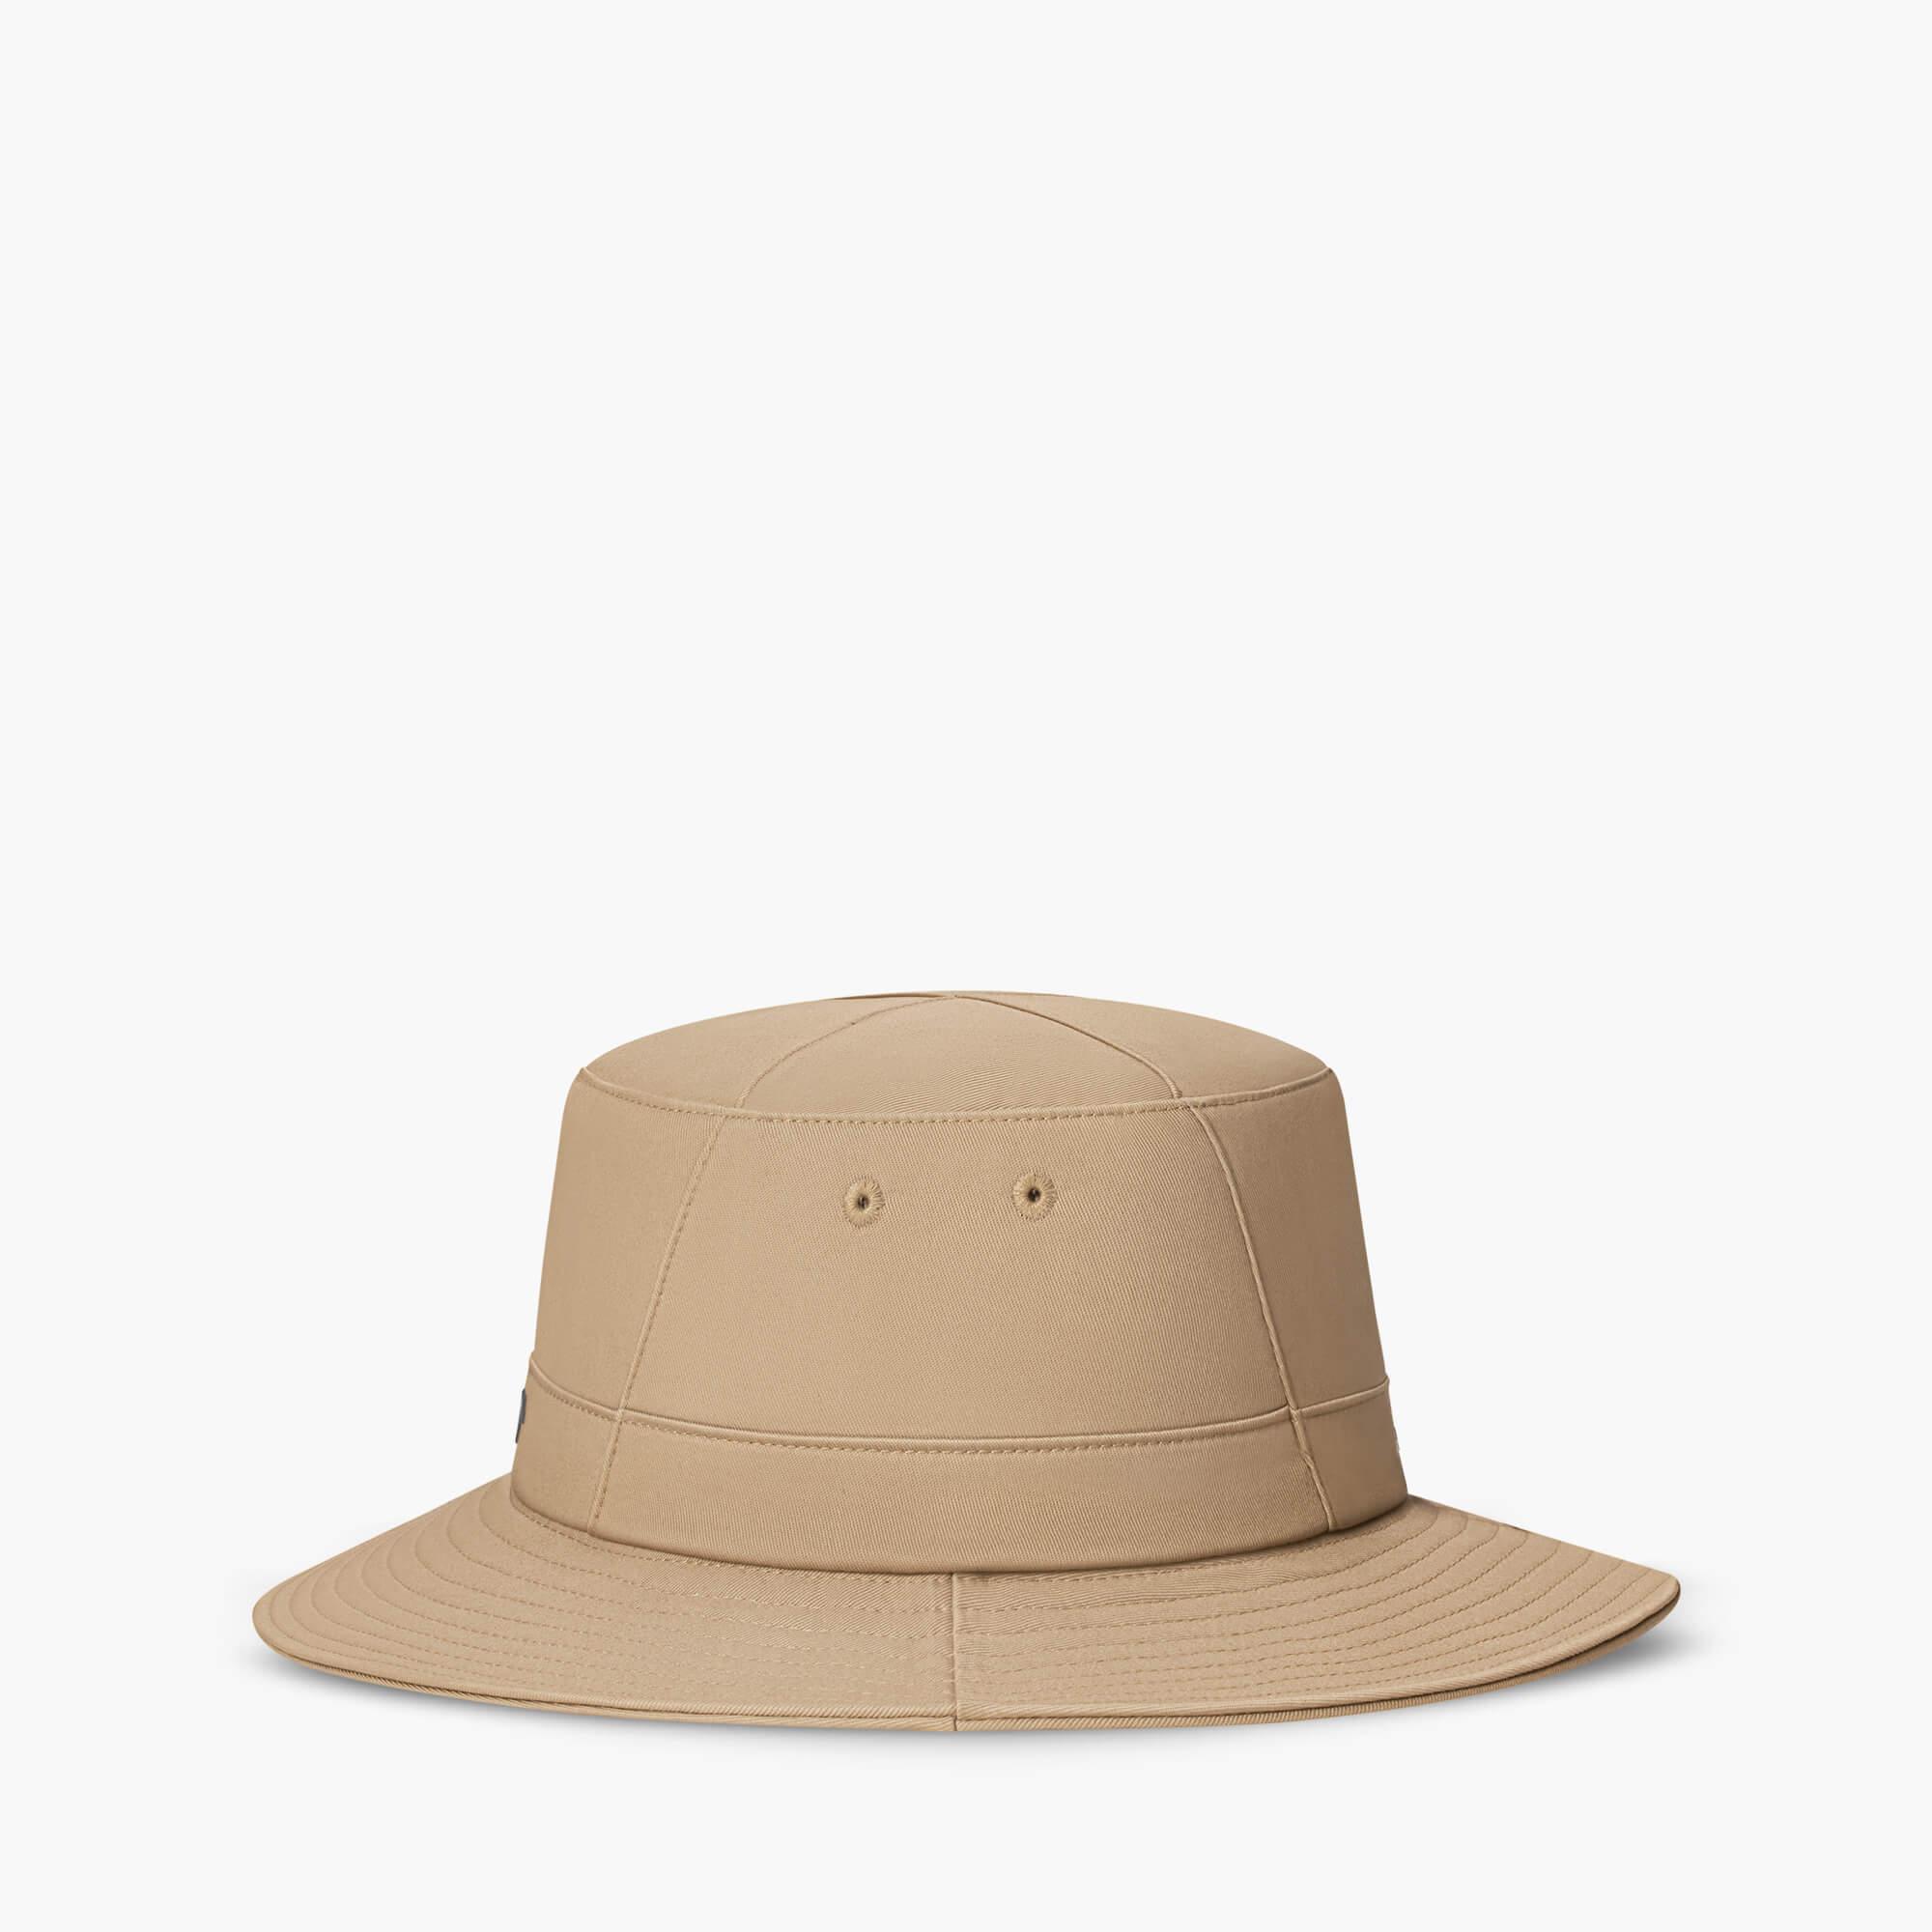 Coolmax Sun Hat For Summer